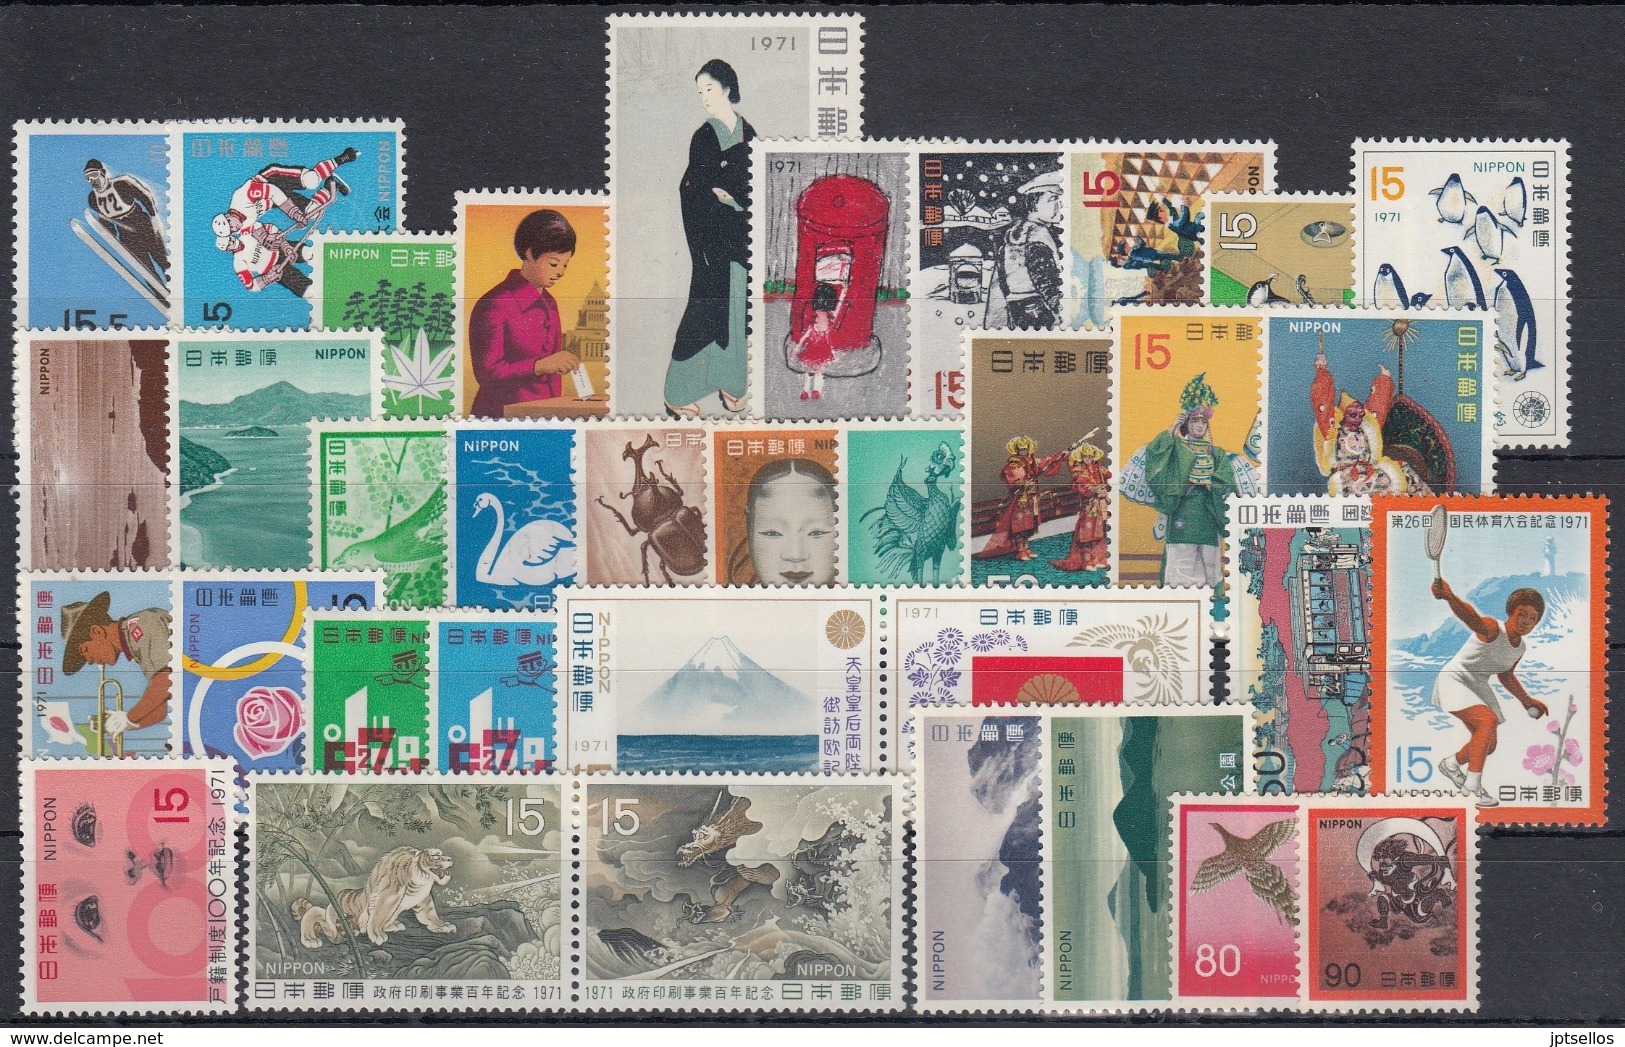 JAPON 1971 Nº1000/32 + 1036/37 + HB-69 NUEVO PEPFECTO 35 SELLOS + 1 HB - Annate Complete